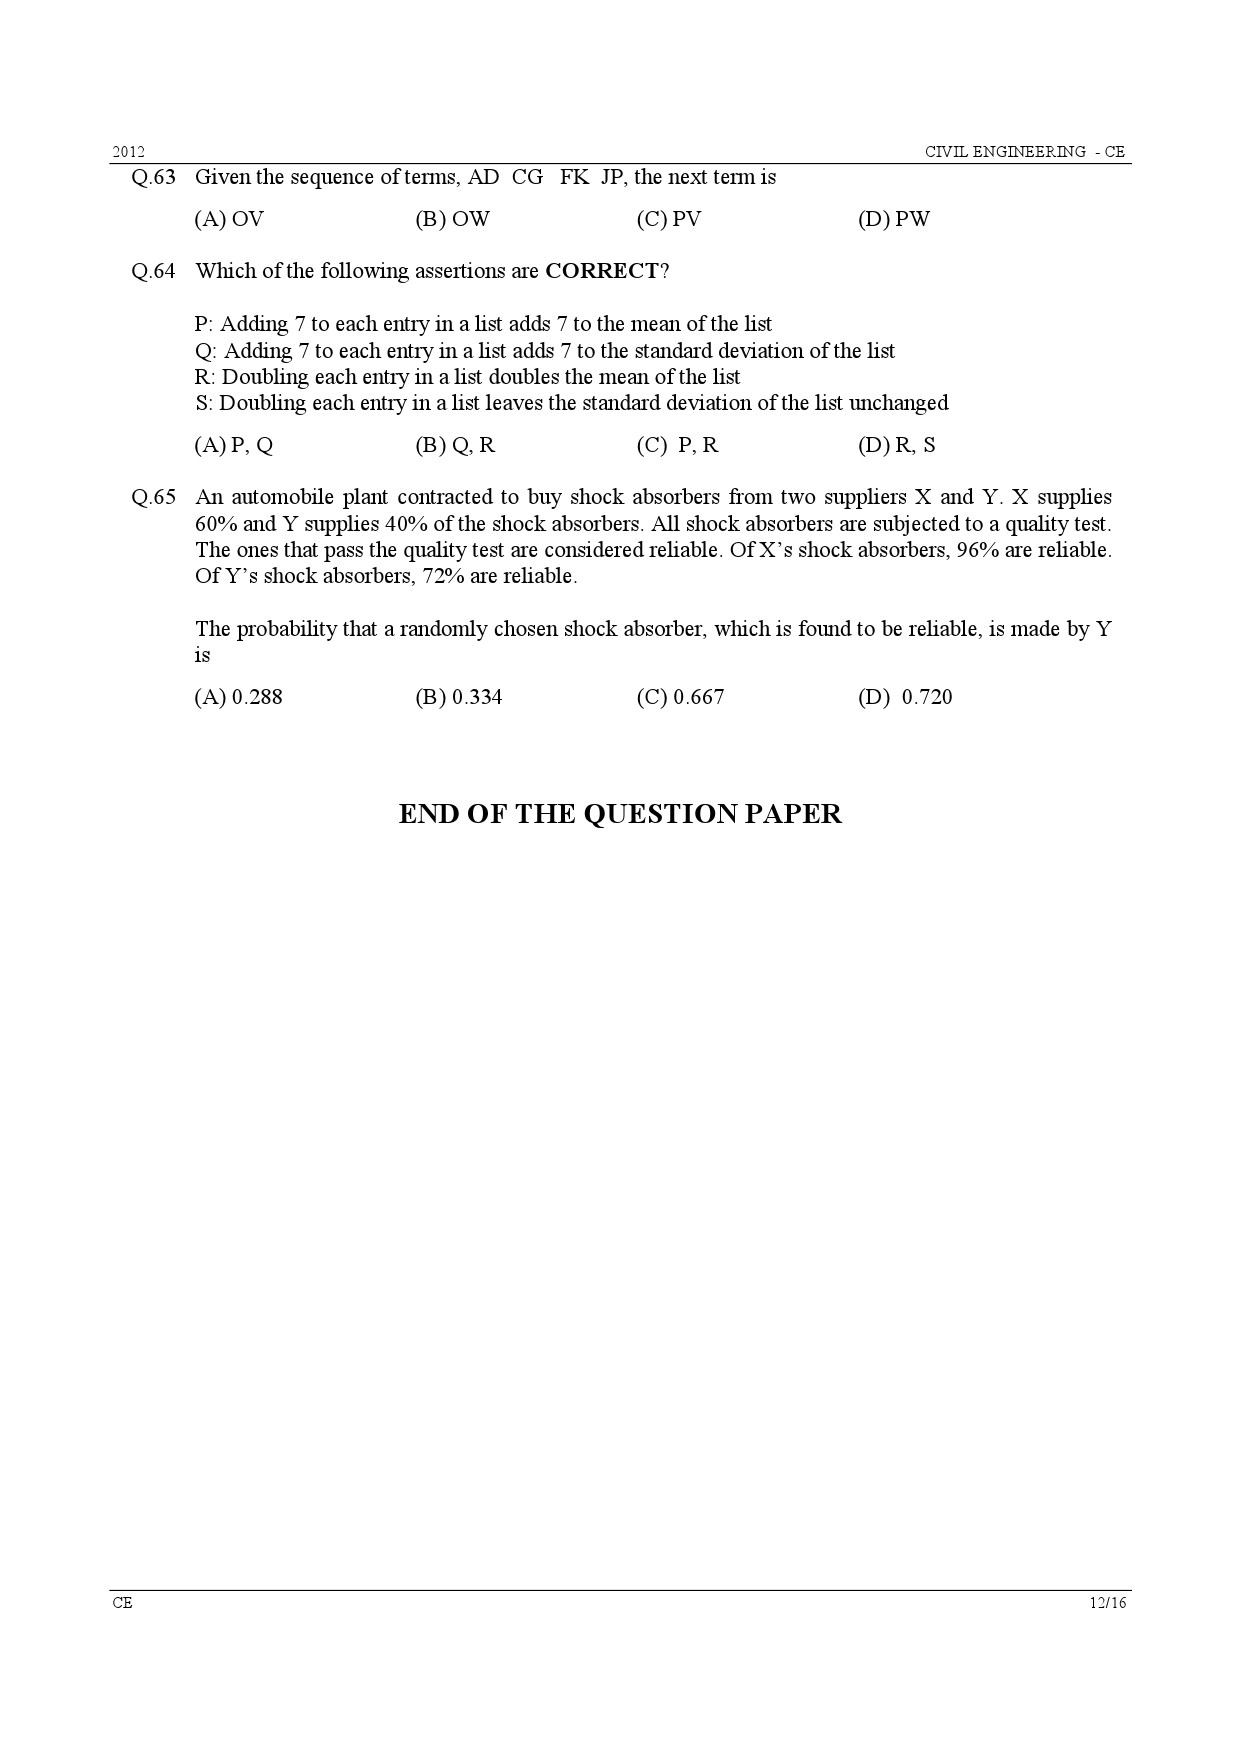 GATE Exam Question Paper 2012 Civil Engineering 12